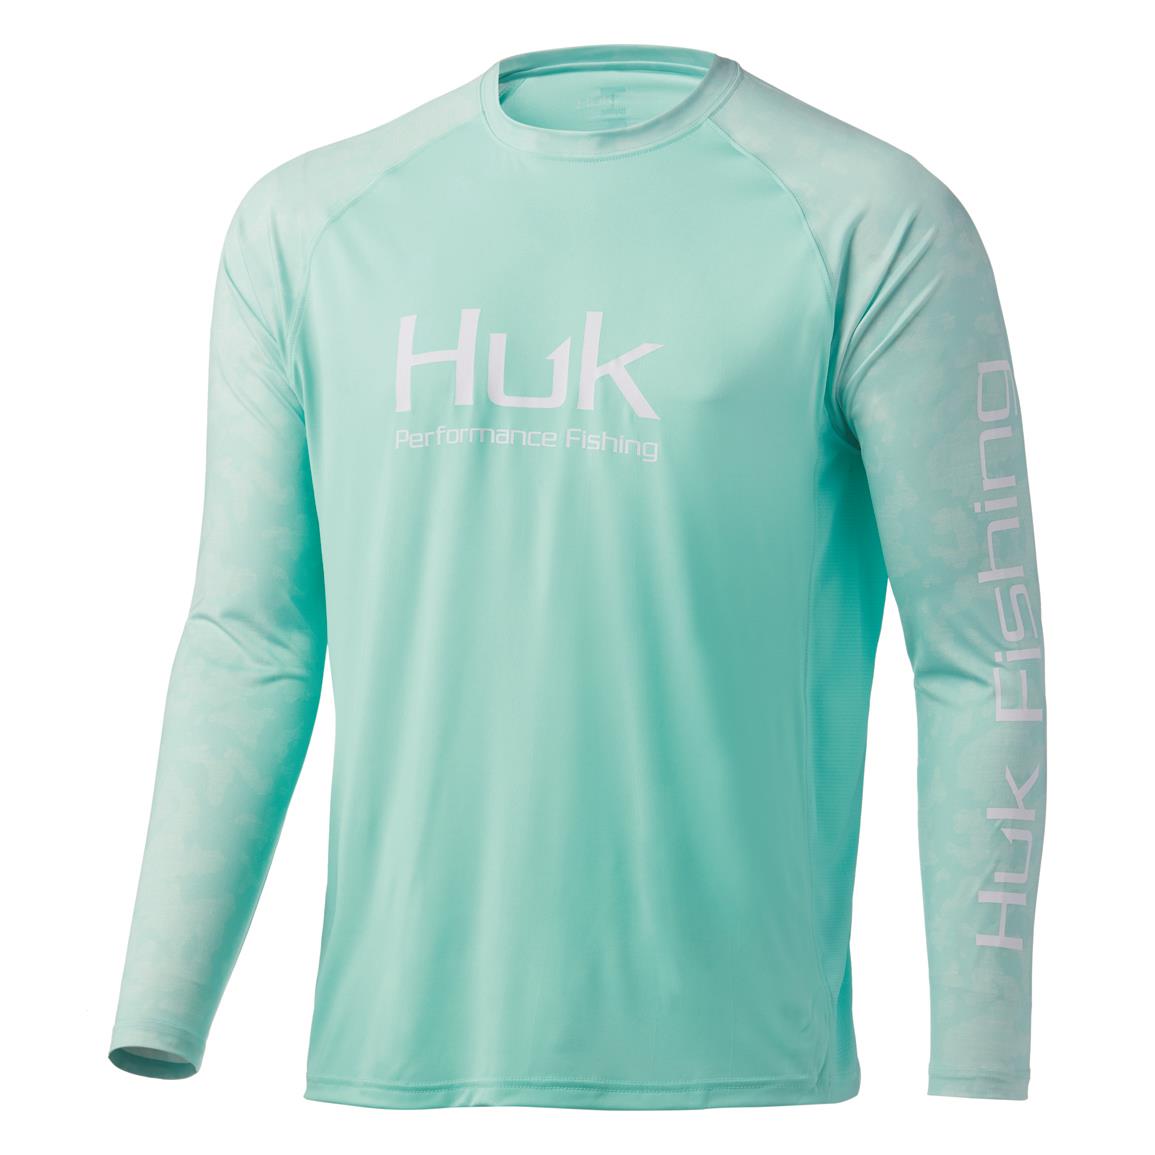 Huk Youth Running lakes Double Header Long-Sleeve Shirt, Beach Glass